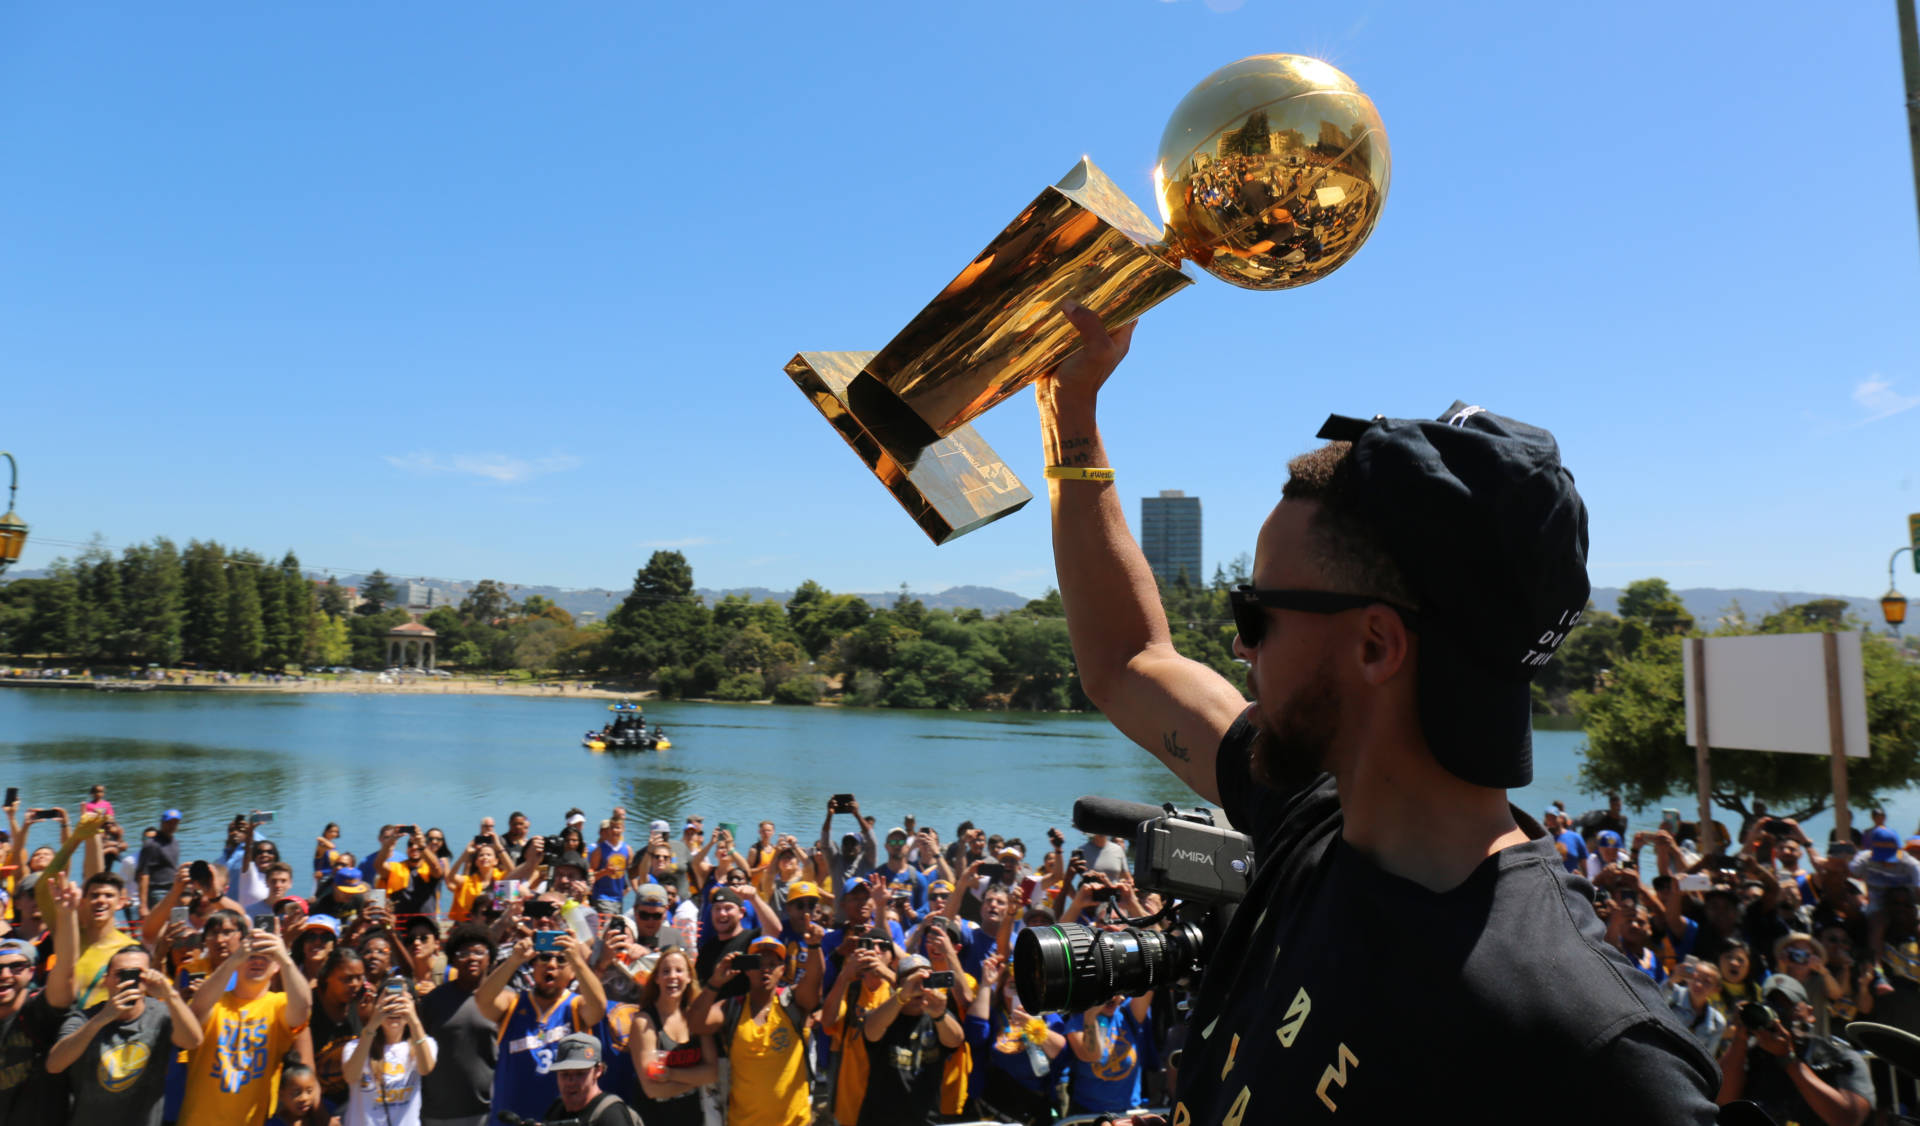 Stephen Curry lifts the NBA Championship trophy to Warriors fans lining Lake Merritt. Adam Grossberg/KQED